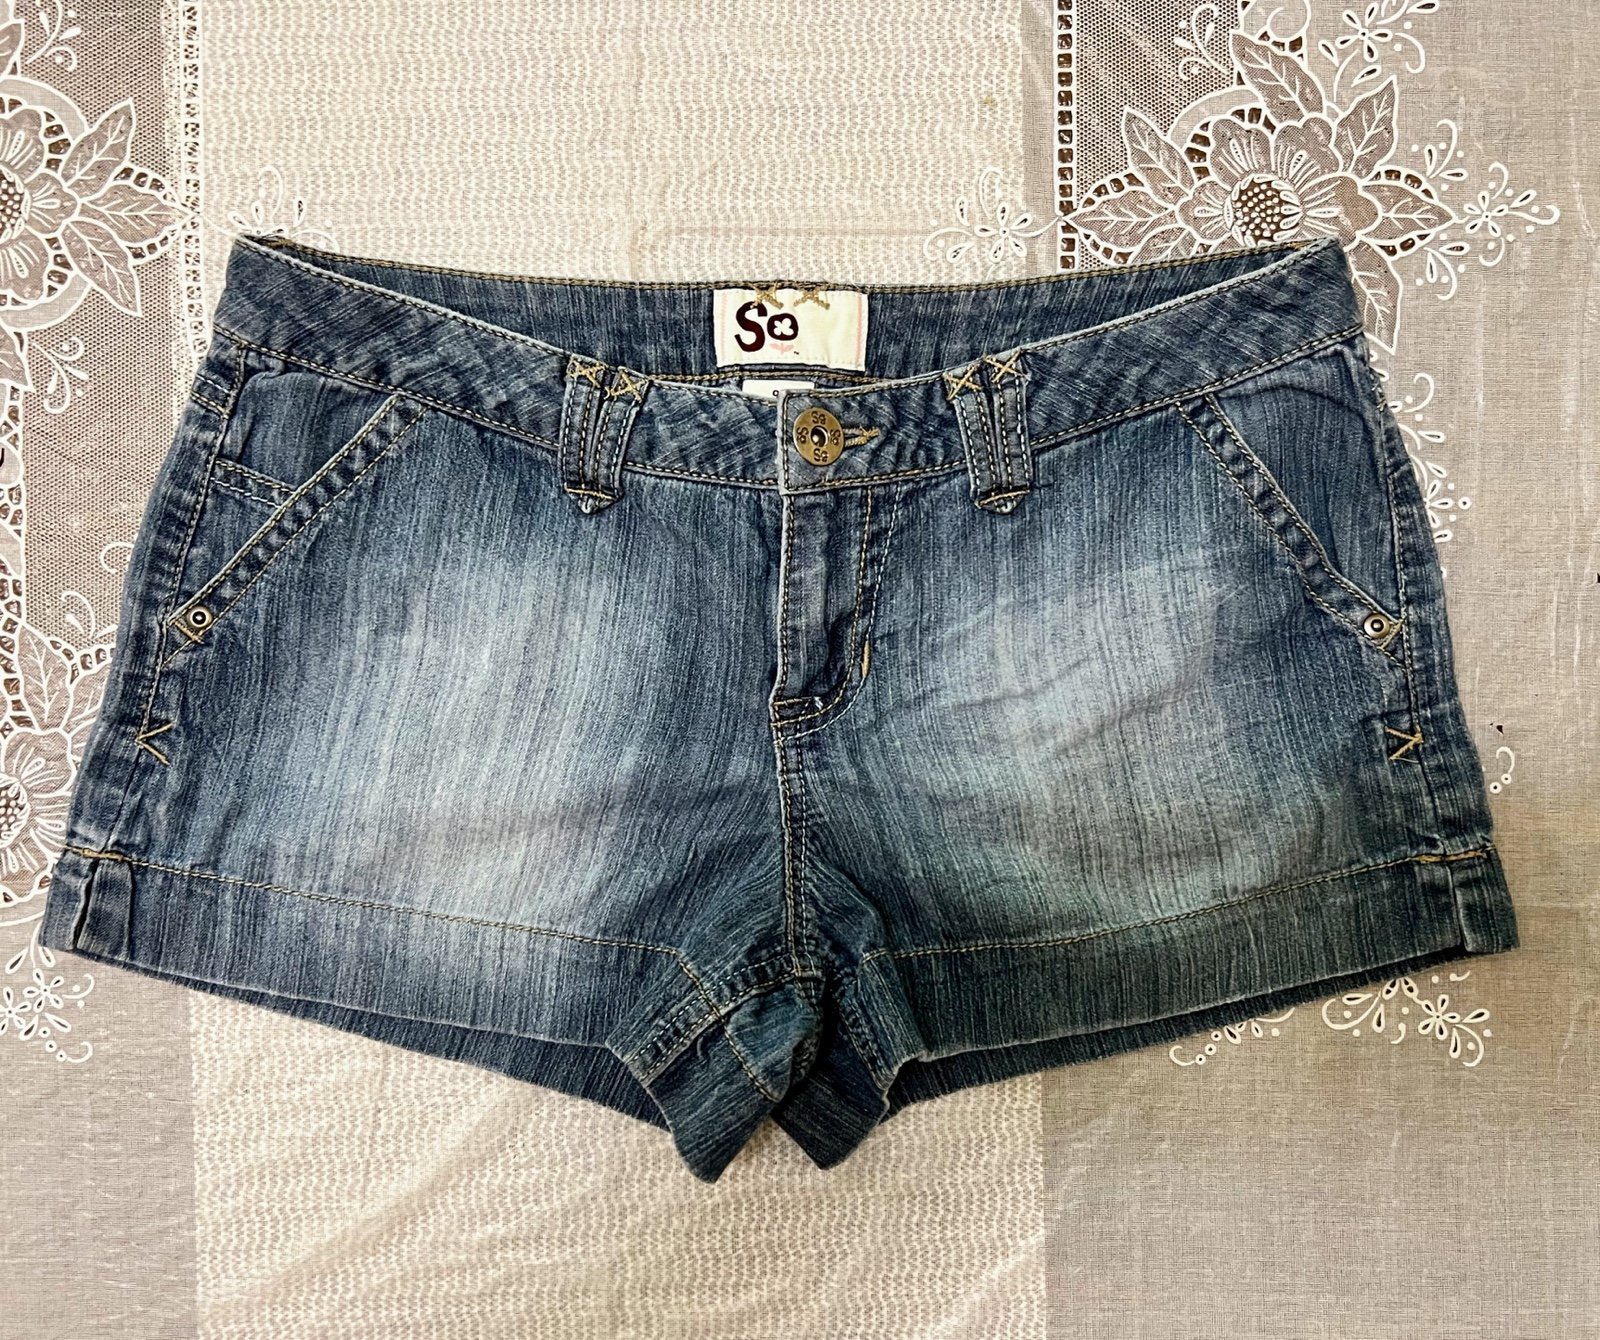 Wholesale price Women’s jean shorts gVVRH5w89 Great